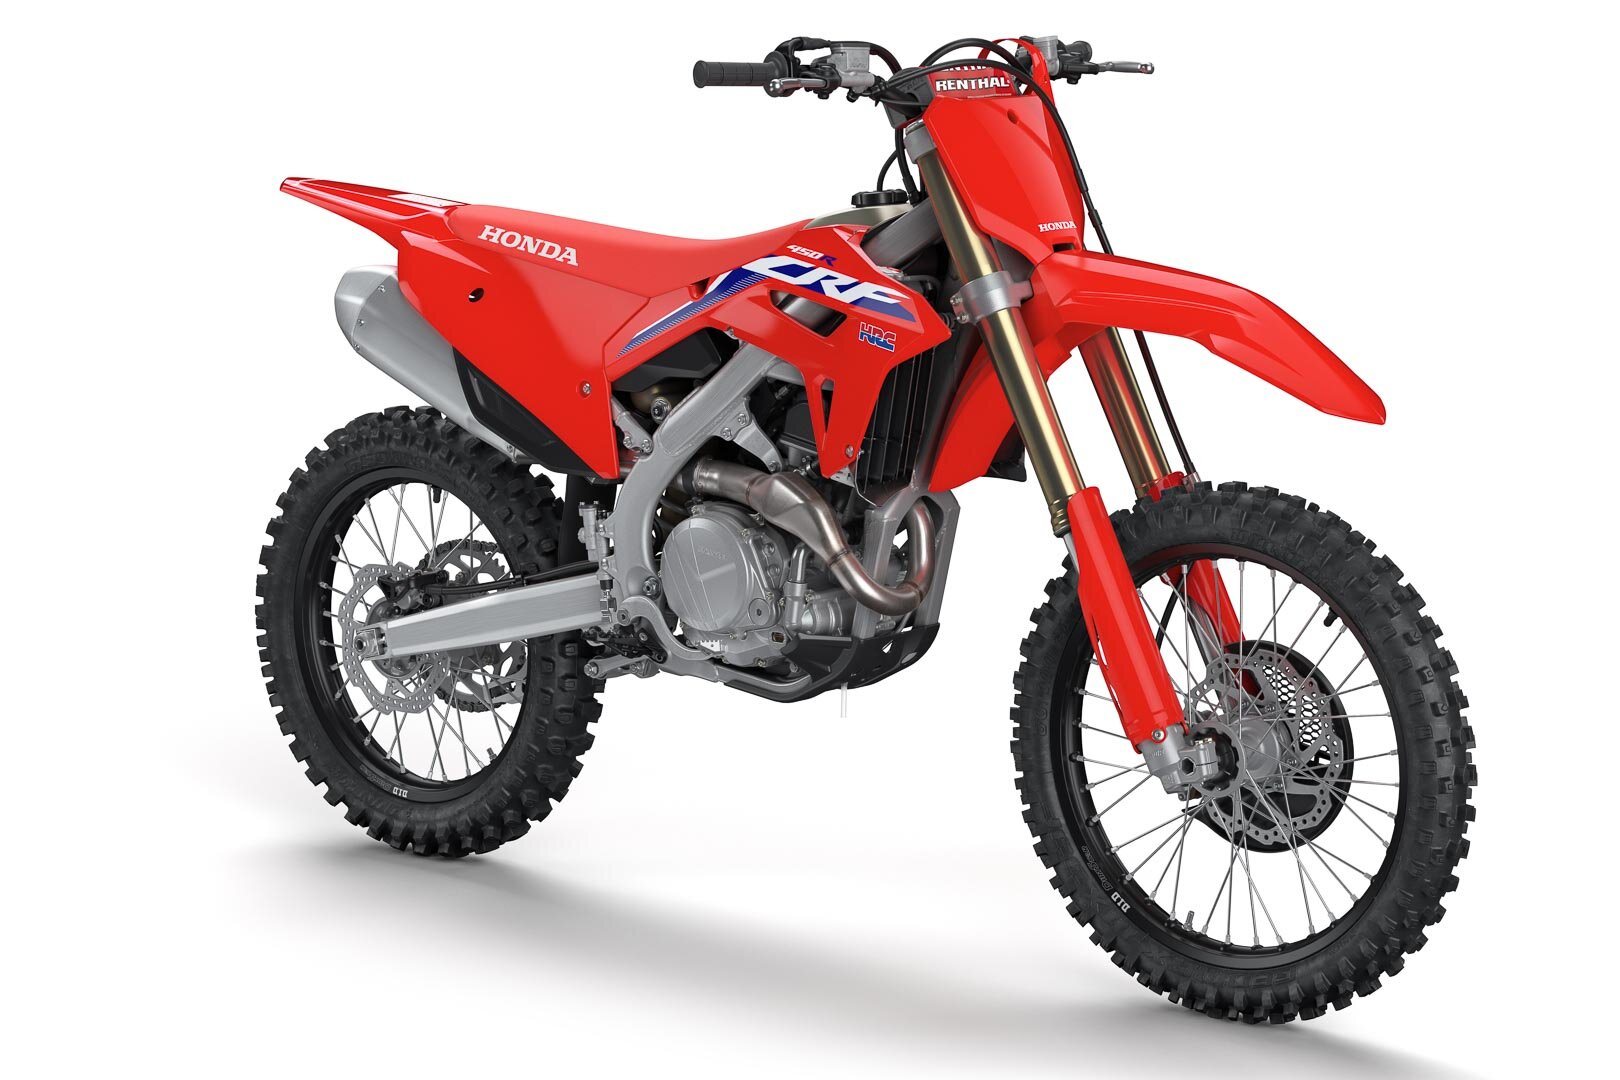 2021-Honda-CRF450R-First-Look-motocross-supercross-motorcycle-8.jpg